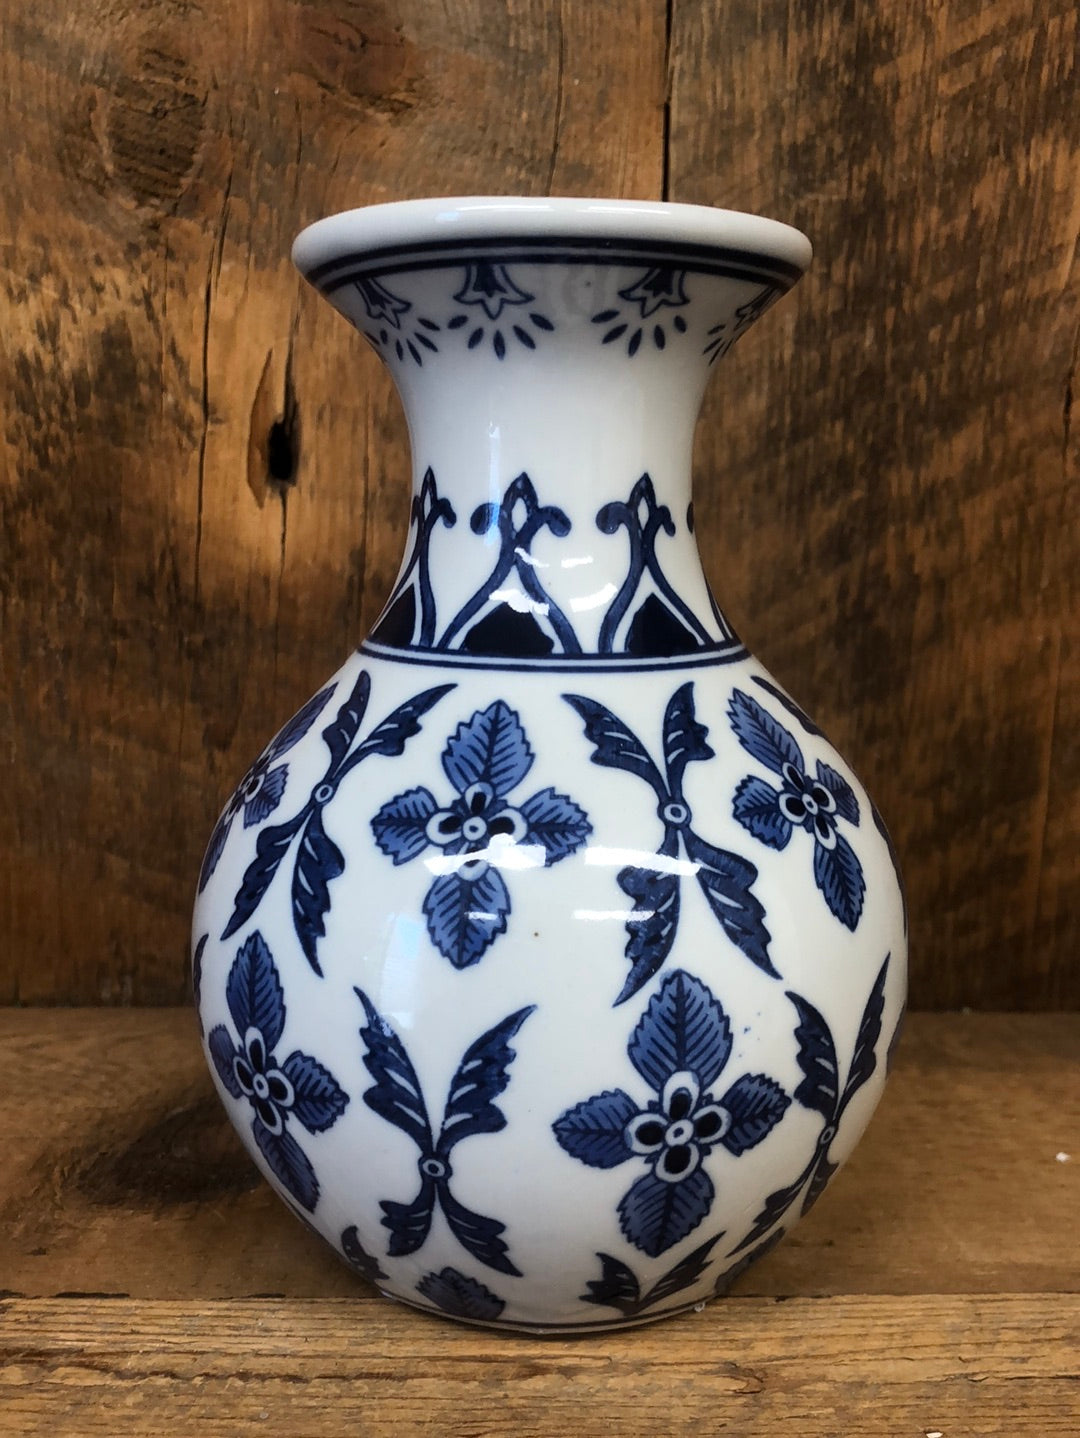 Blue and White Porcelain Bud Vase Medium